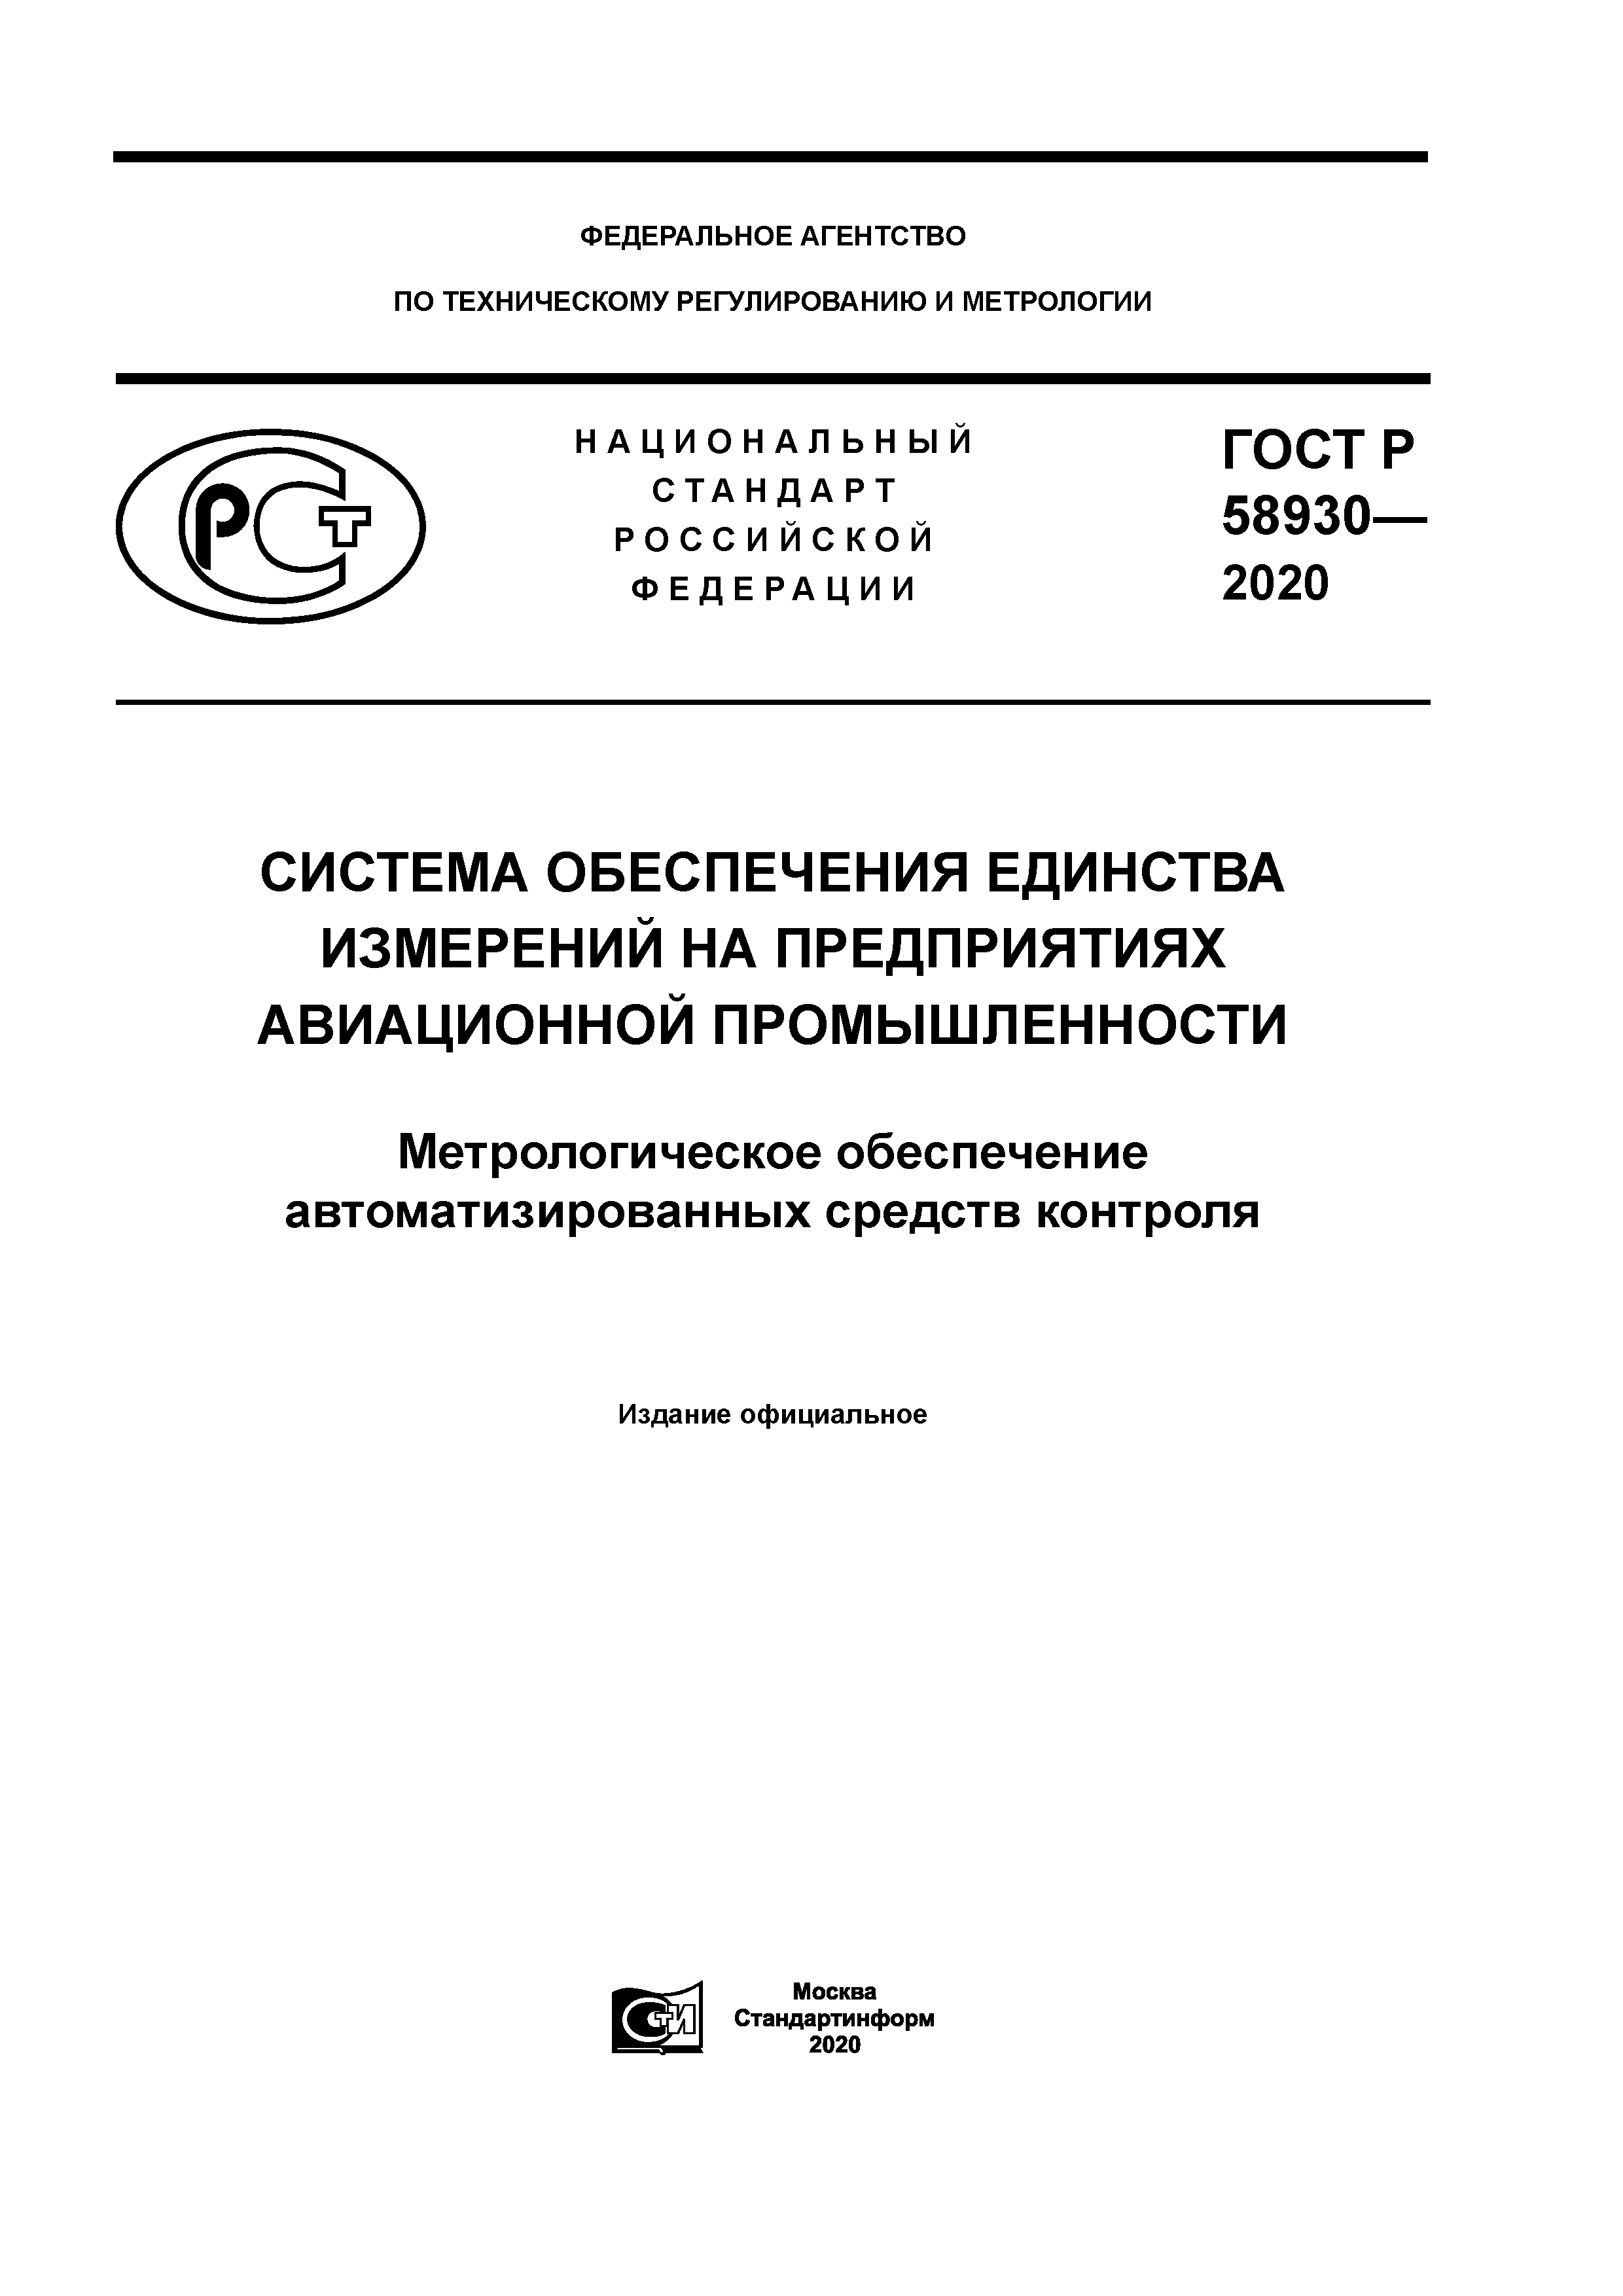 ГОСТ Р 58930-2020